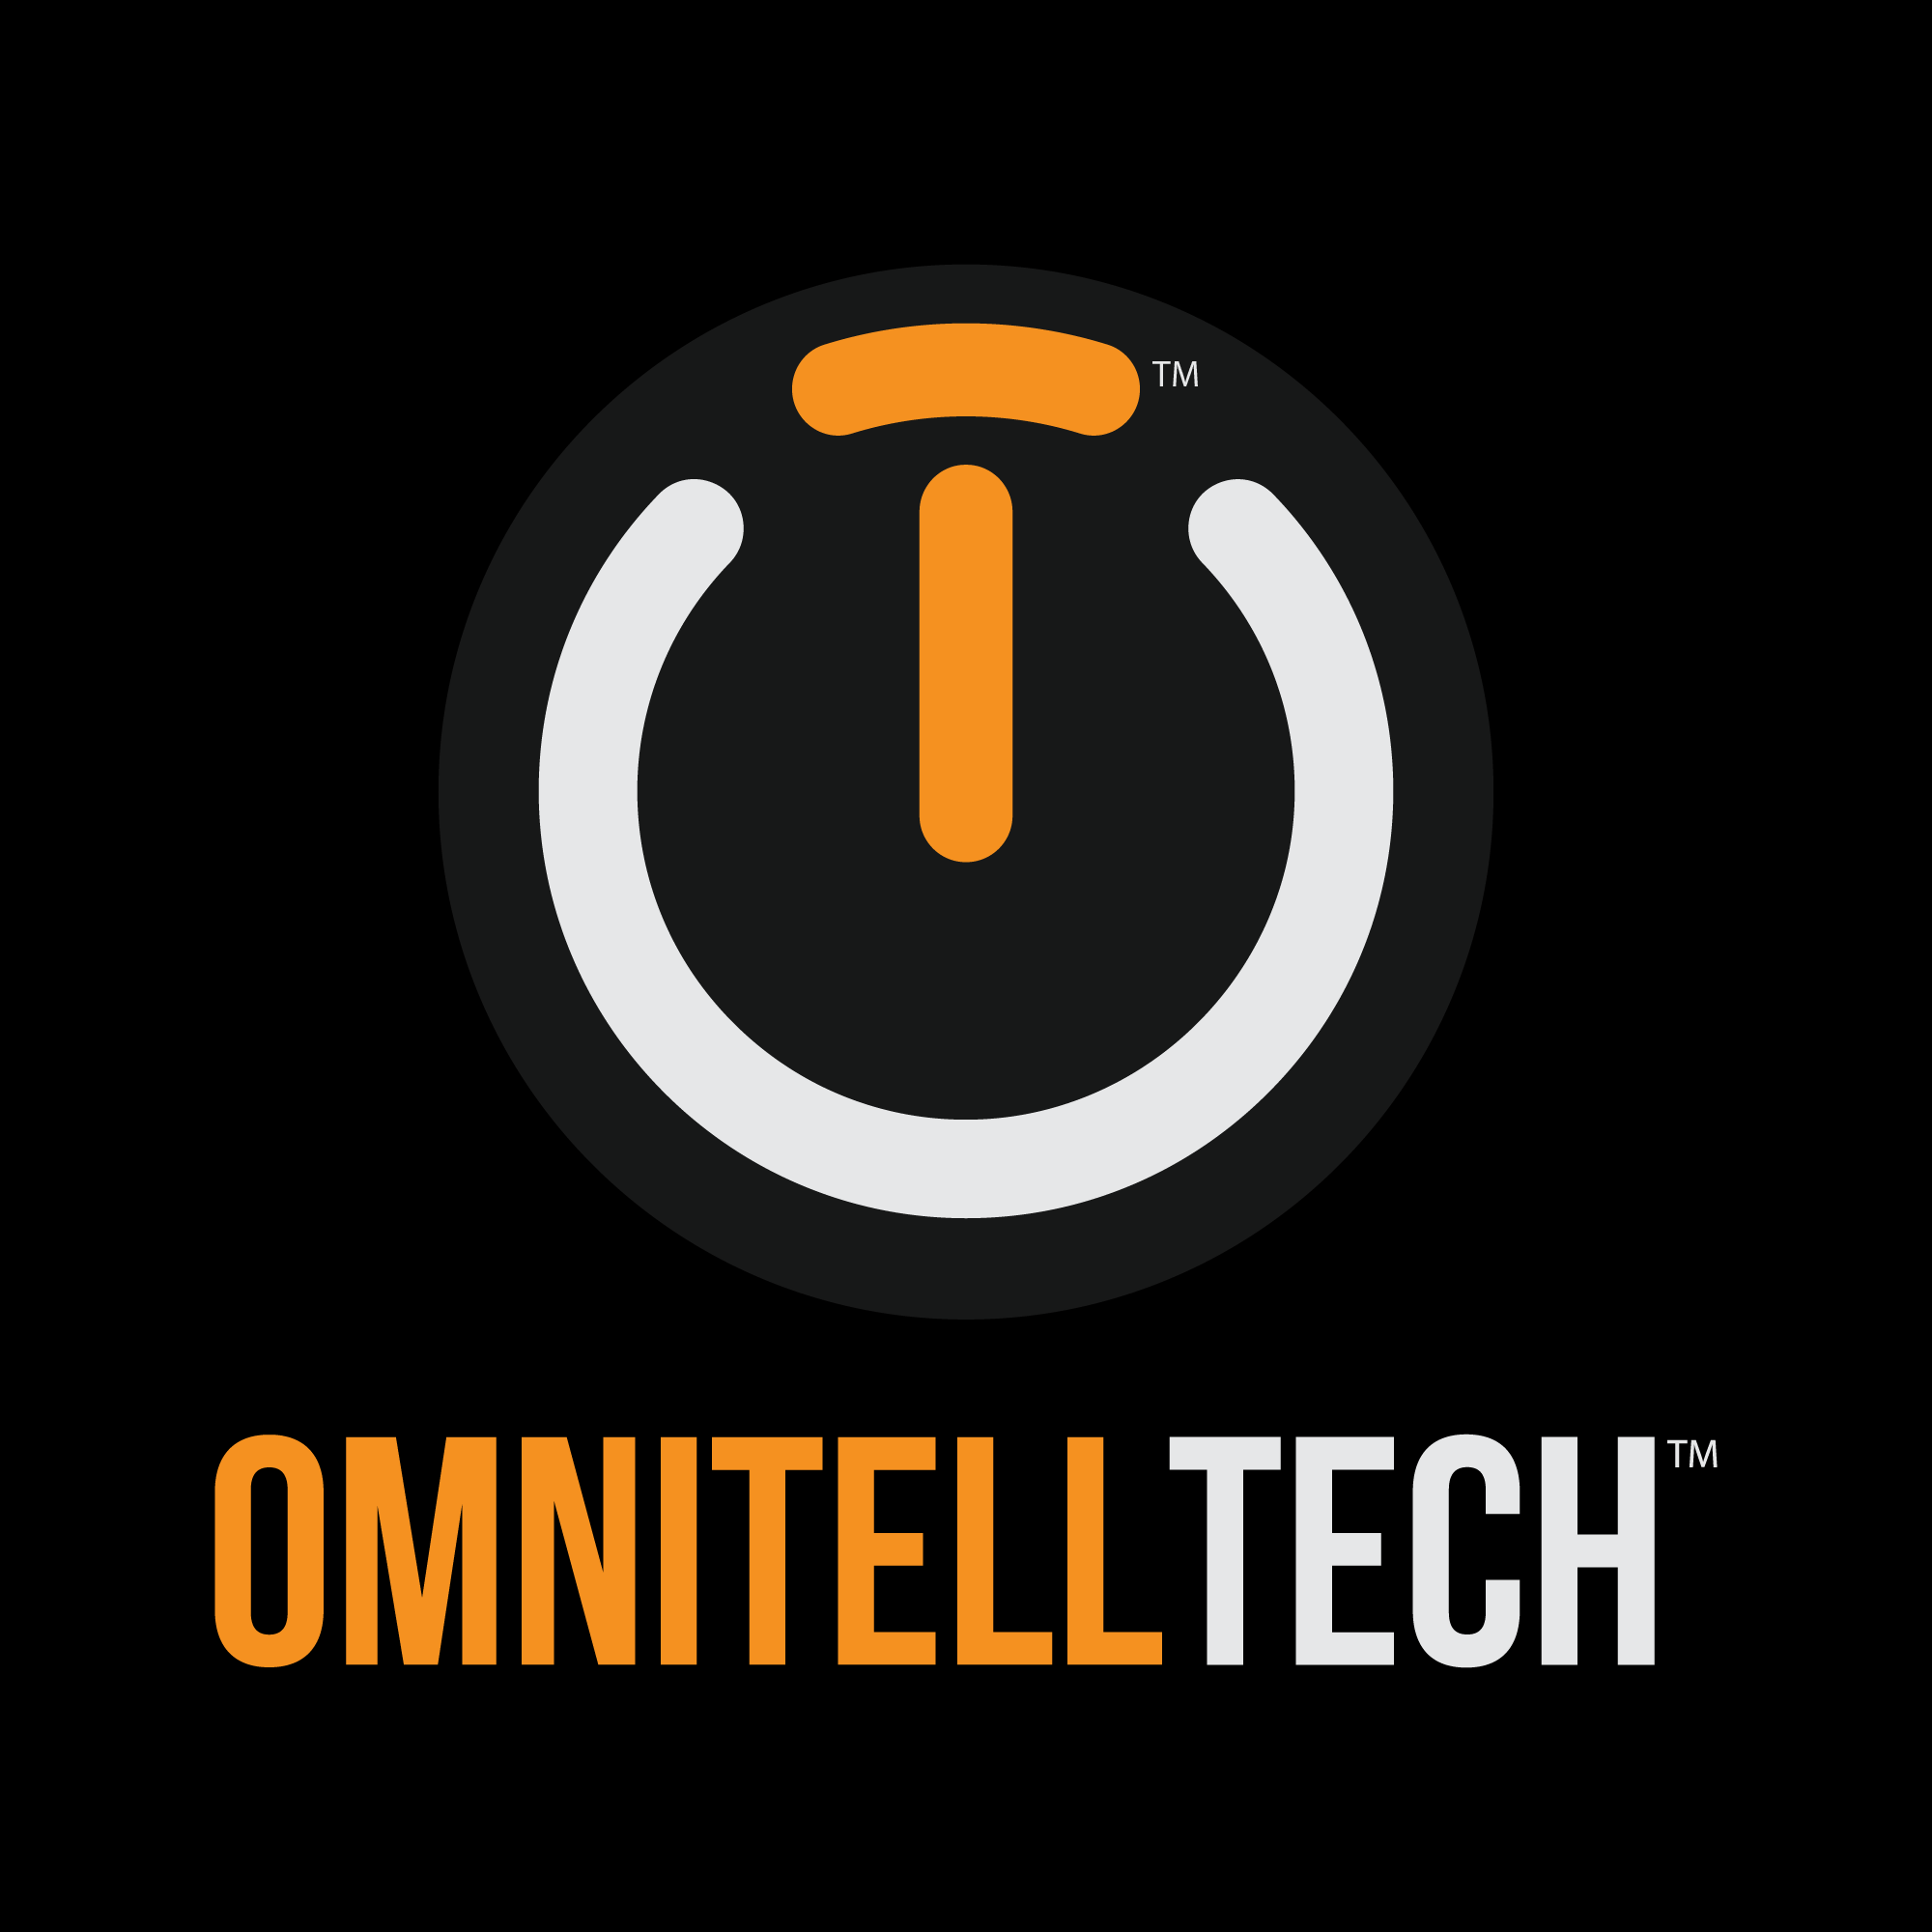 OmniTell Tech Group